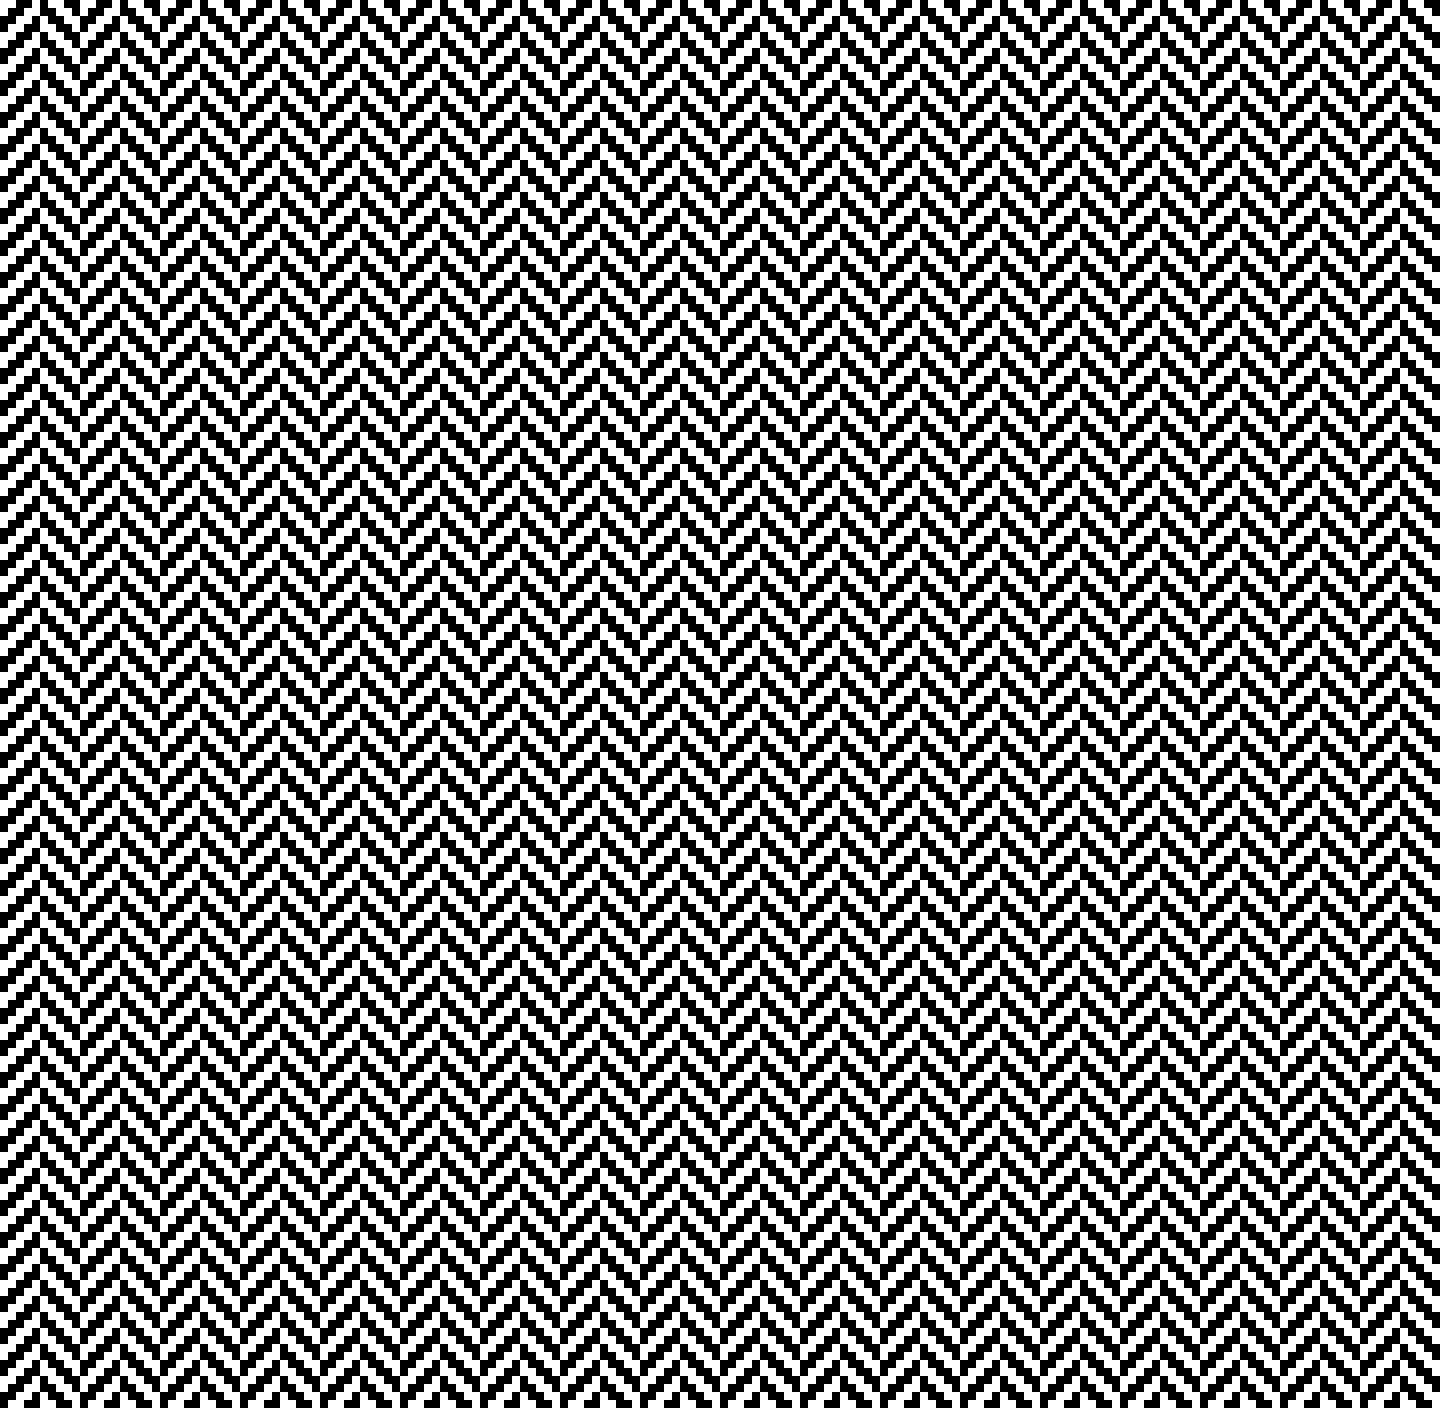 Herringbone Pixel Pattern Vector (SVG)